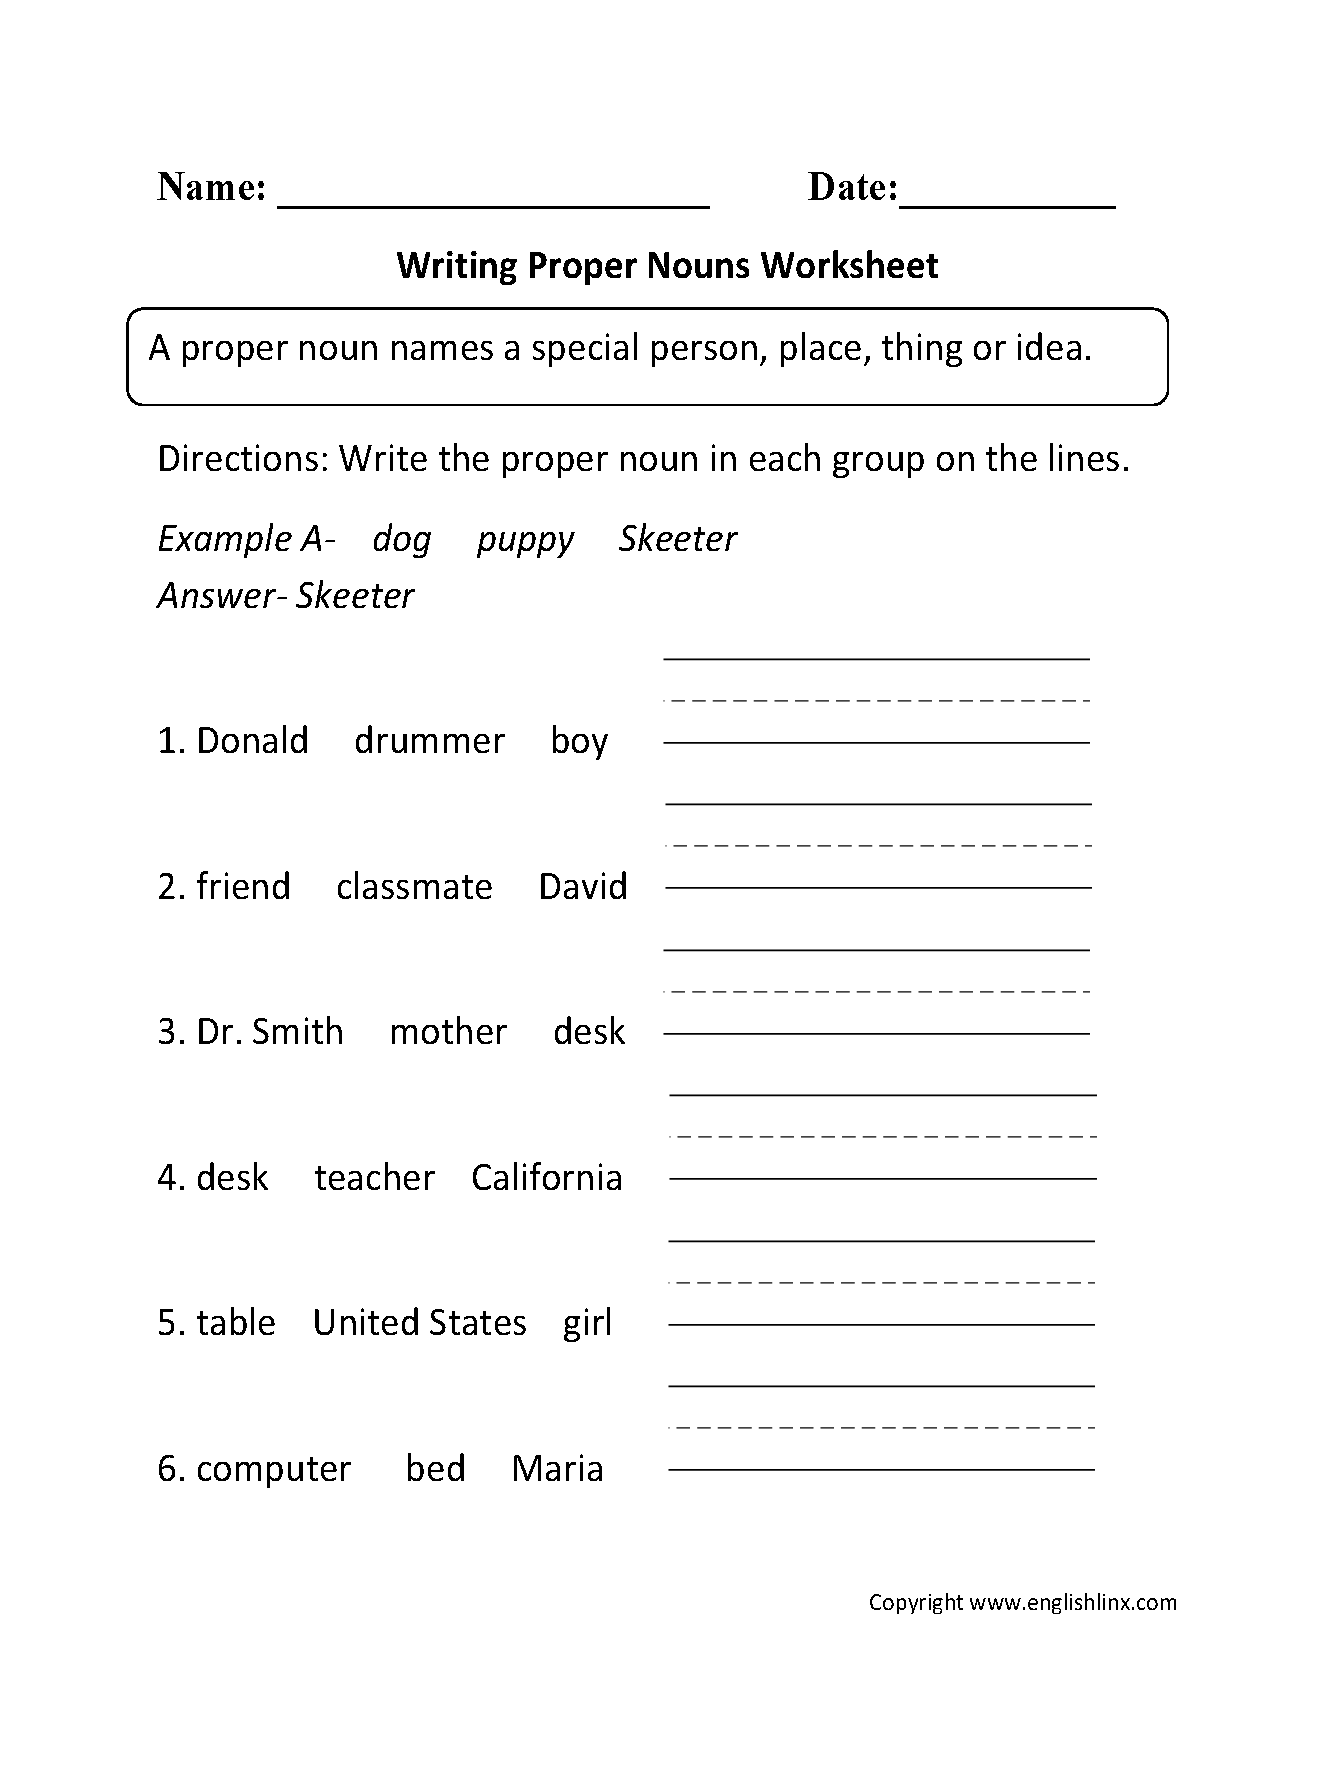 common-and-proper-nouns-worksheet-for-grade-4-commonworksheets